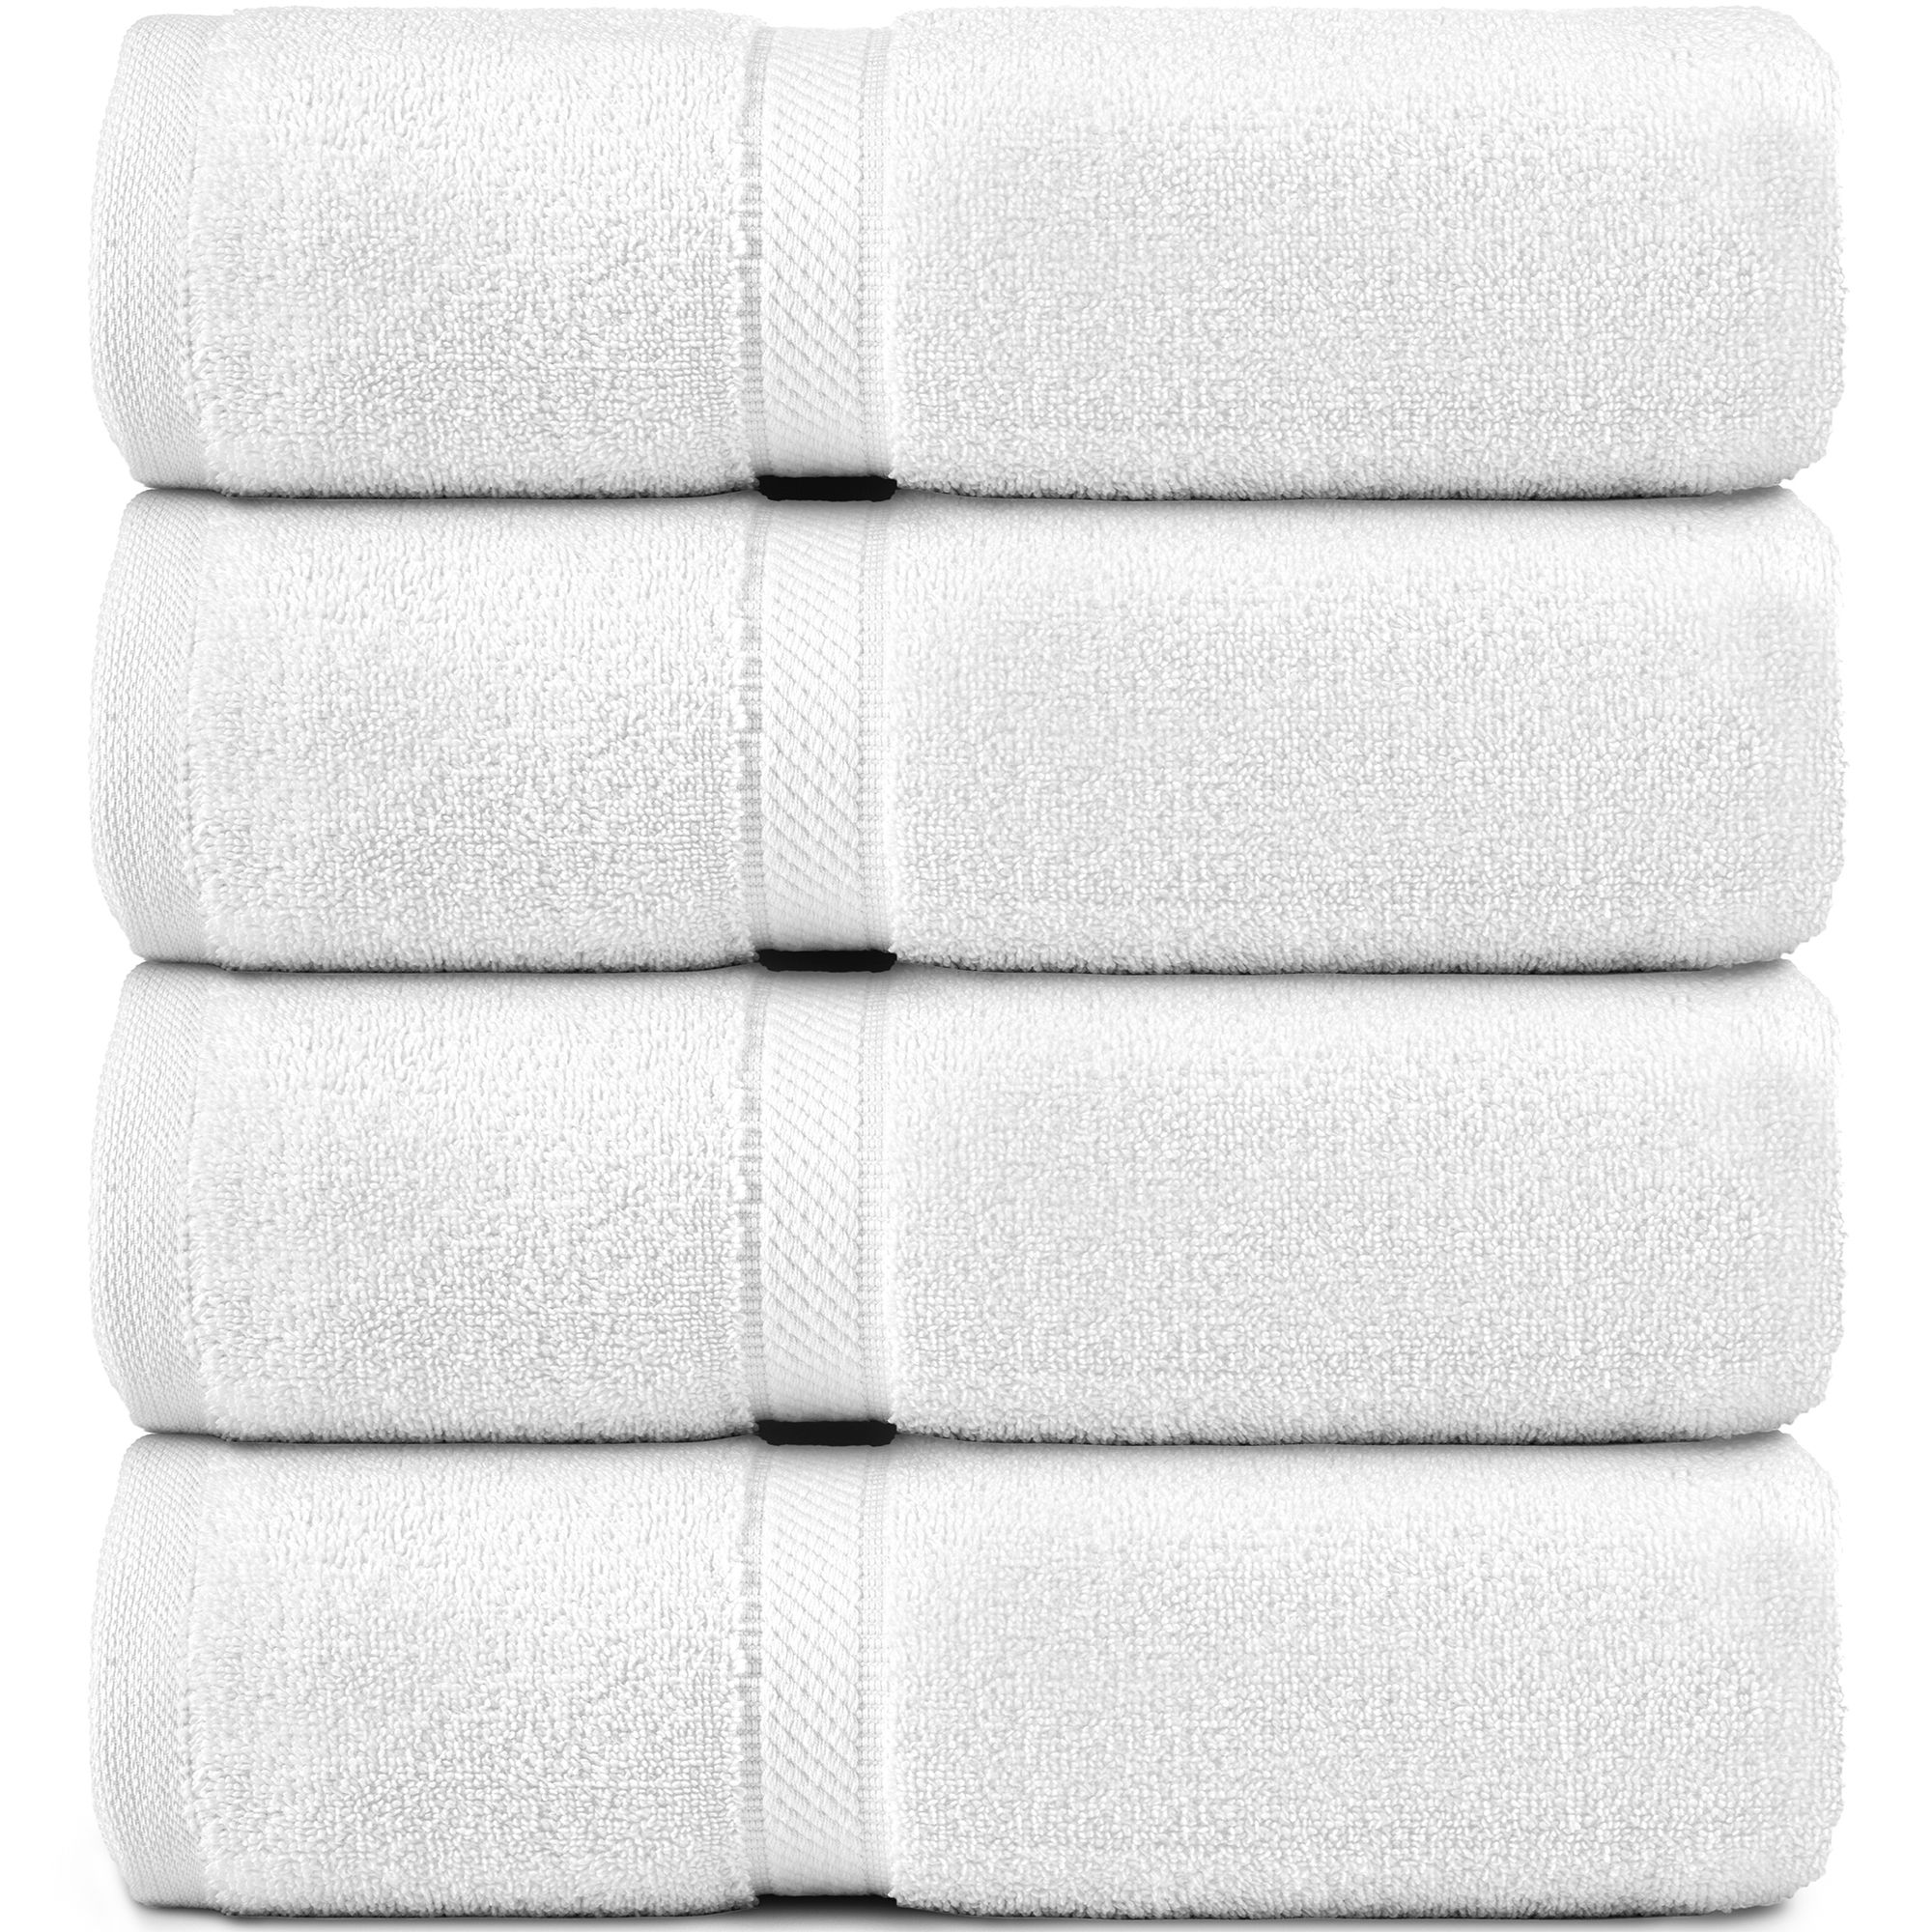 12x12 (1 lb) White 100% Terry Cotton Economy Towel, Towels, Wash